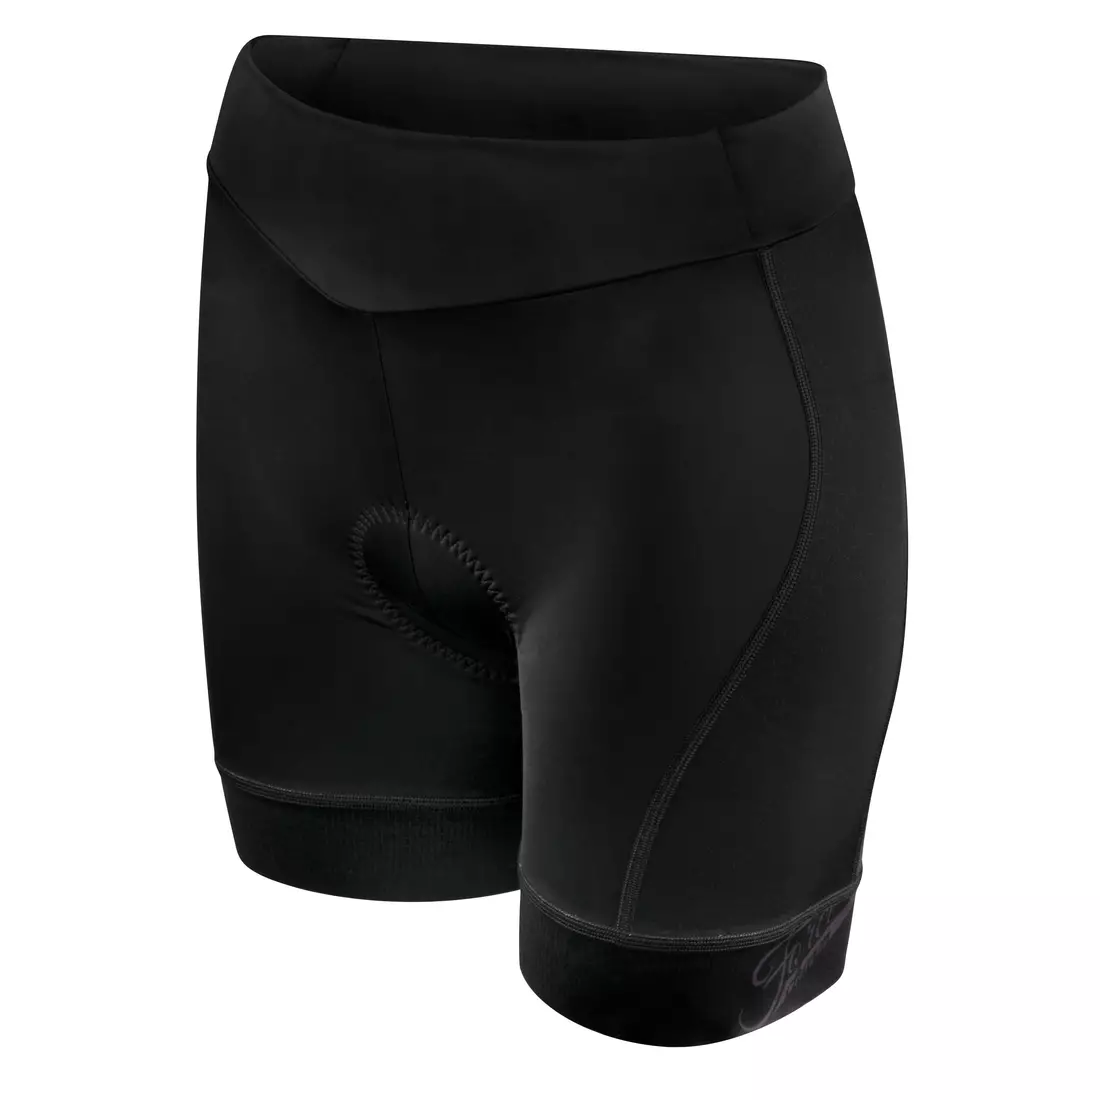 FORCE Women's cycling shorts CHARM LADY, black, 9002381